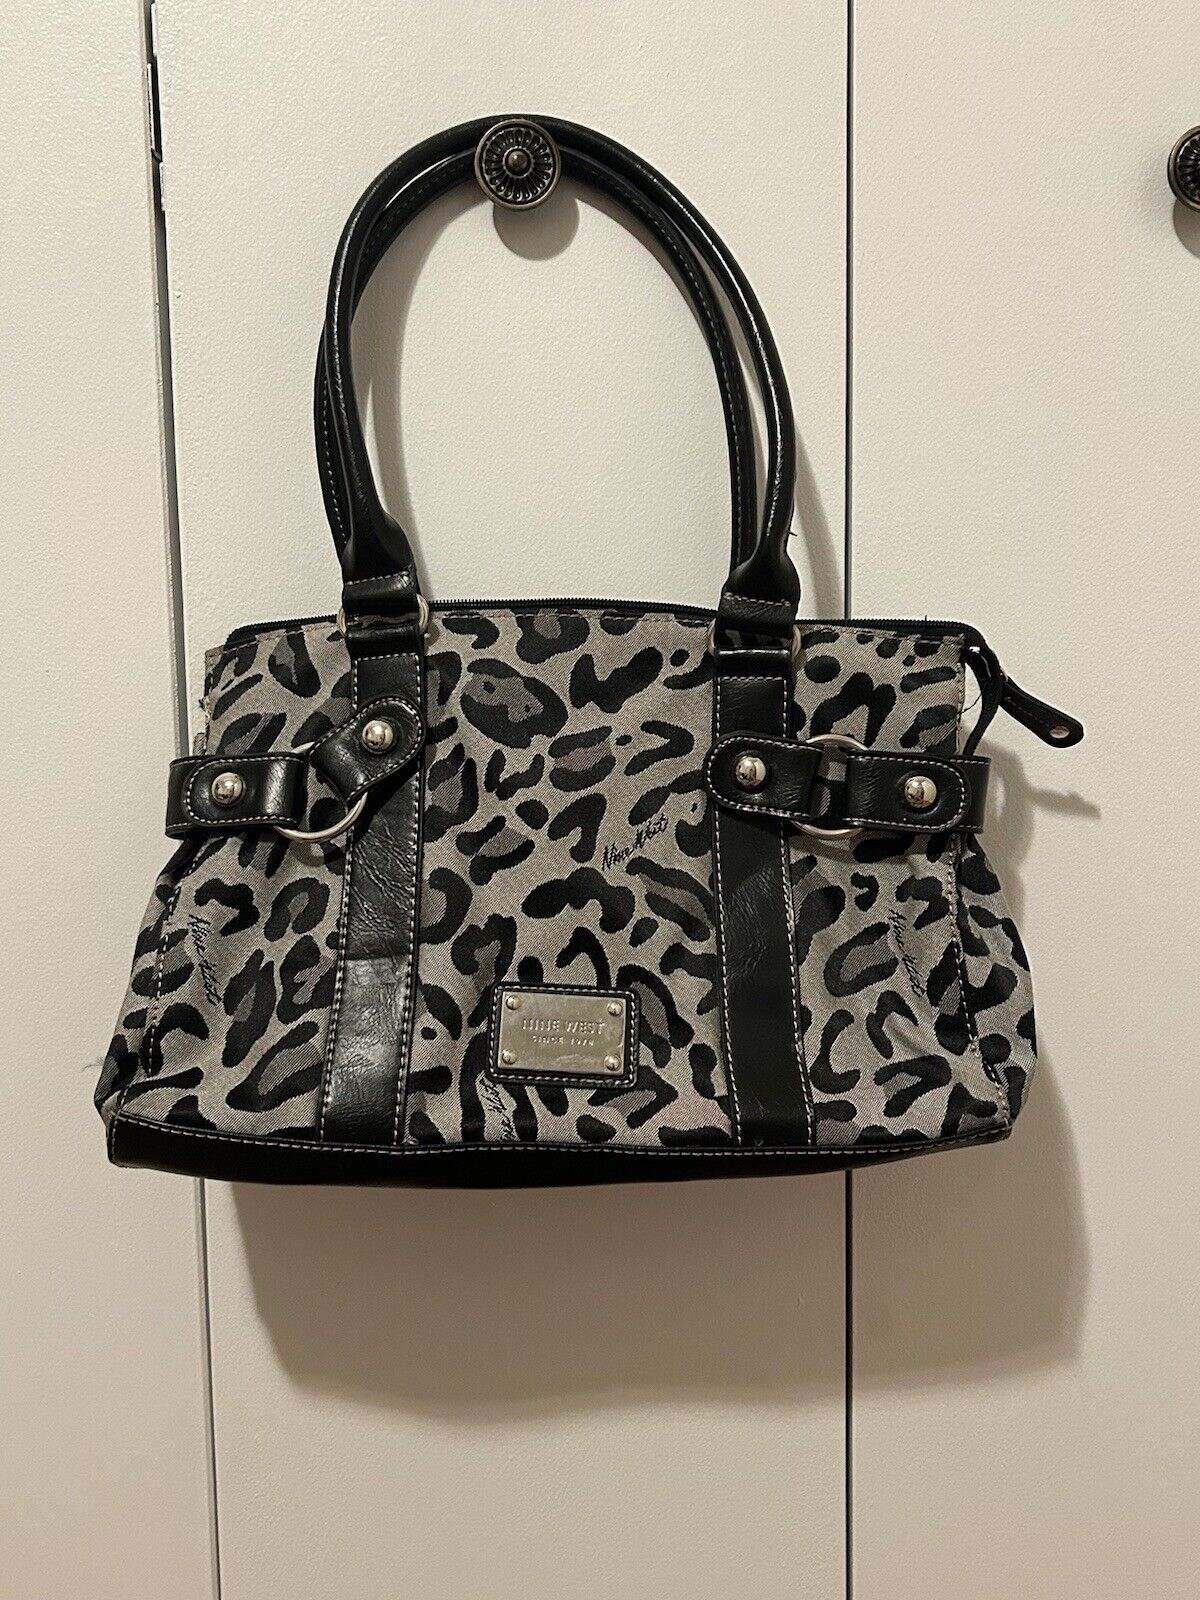 Nine West Grey Leopard Print Handbag - image 1